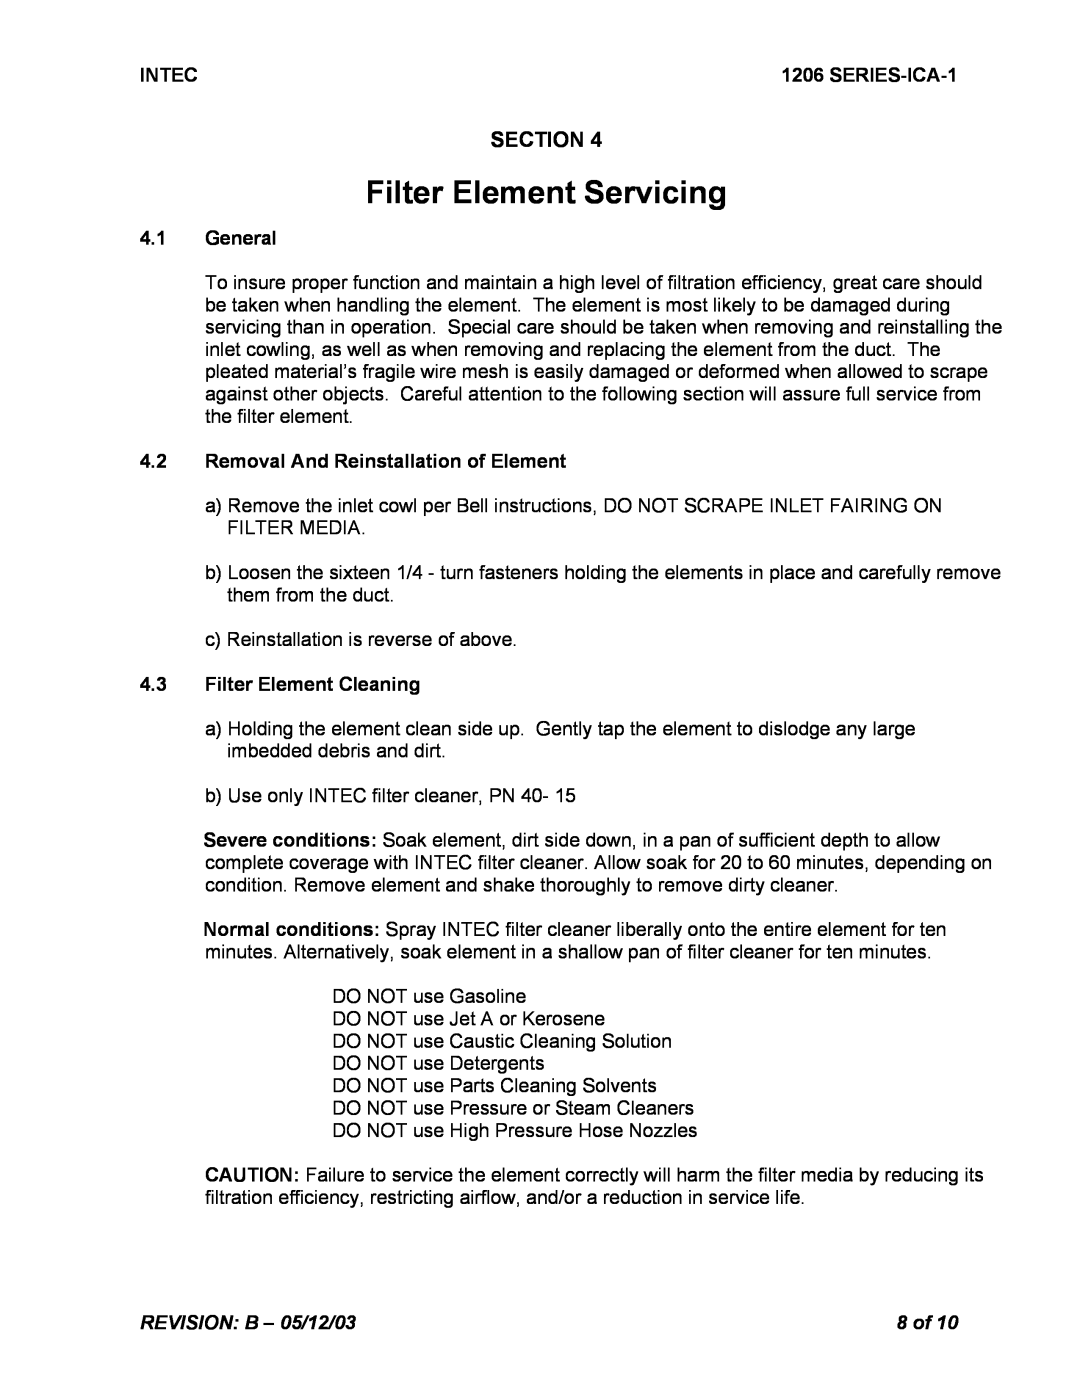 Intec STC SR00180SE manual Filter Element Servicing, Section, Intec, SERIES-ICA-1, 4.1General, 4.3Filter Element Cleaning 